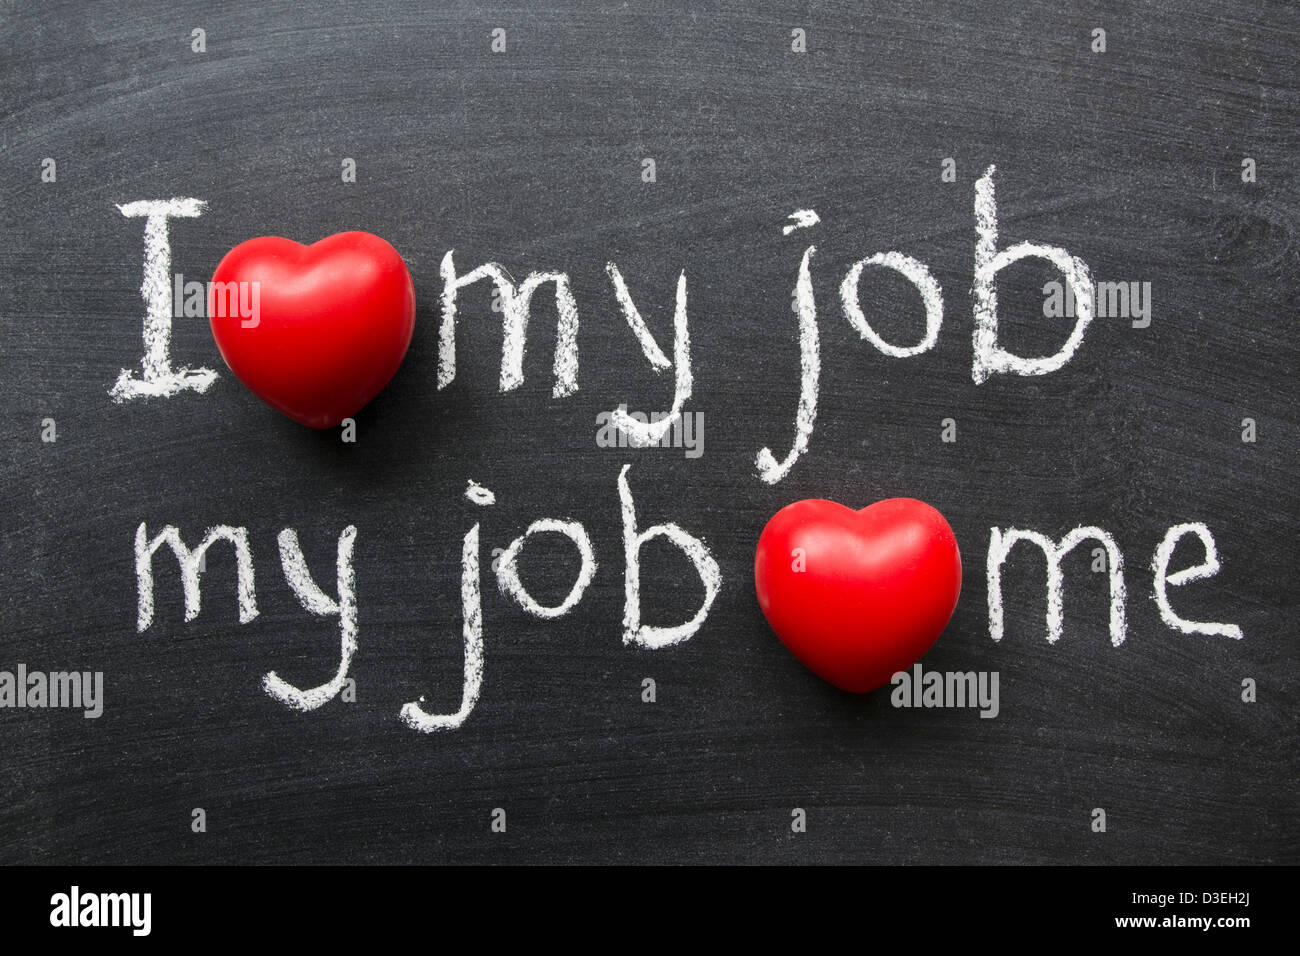 I love my job - positive concept handwritten on black chalkboard with volume red heart symbol Stock Photo